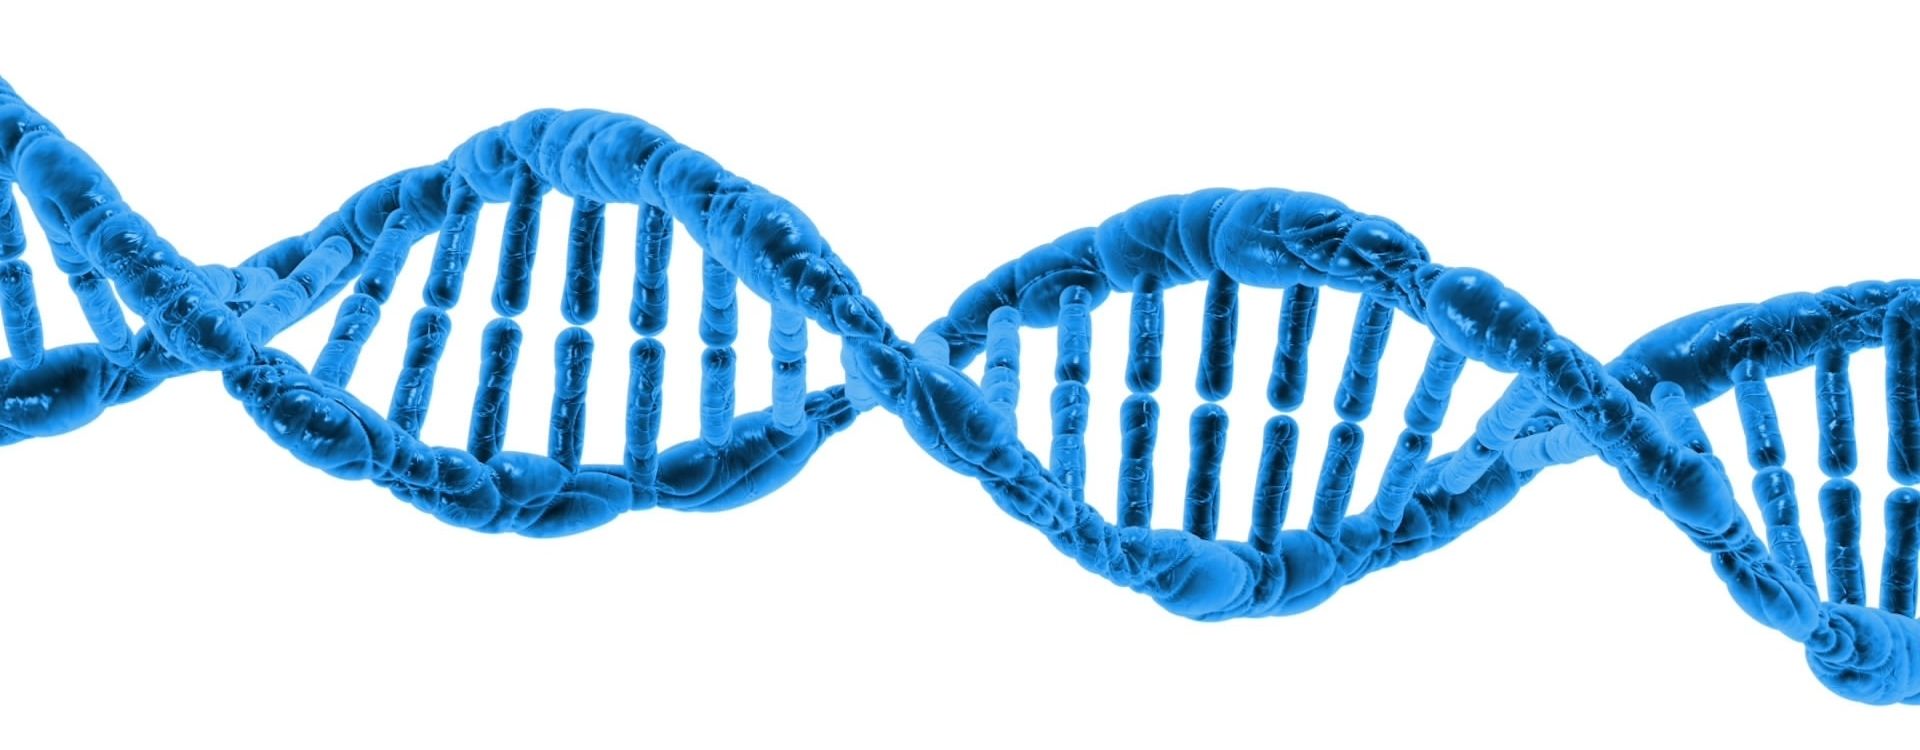 Human Longevity DNA Strand